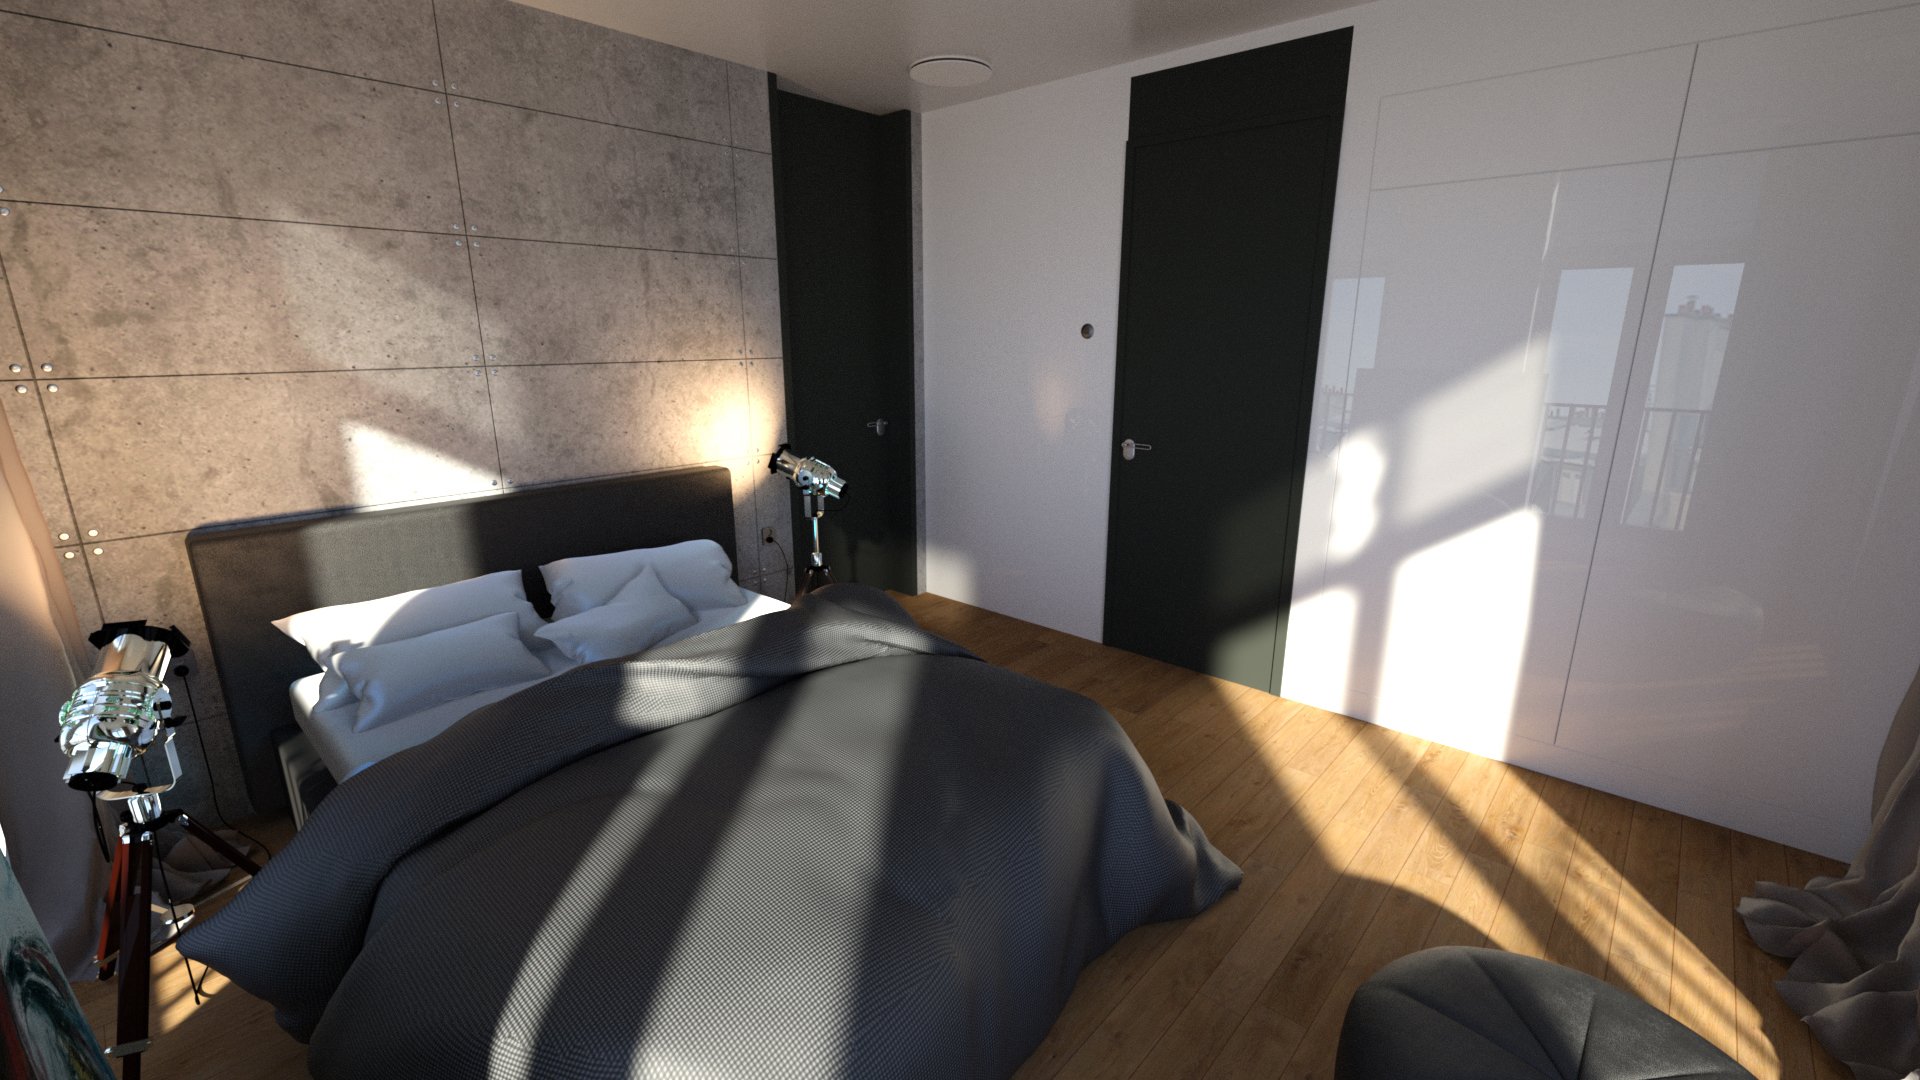 Bachelor's Bedroom by: Digitallab3D, 3D Models by Daz 3D